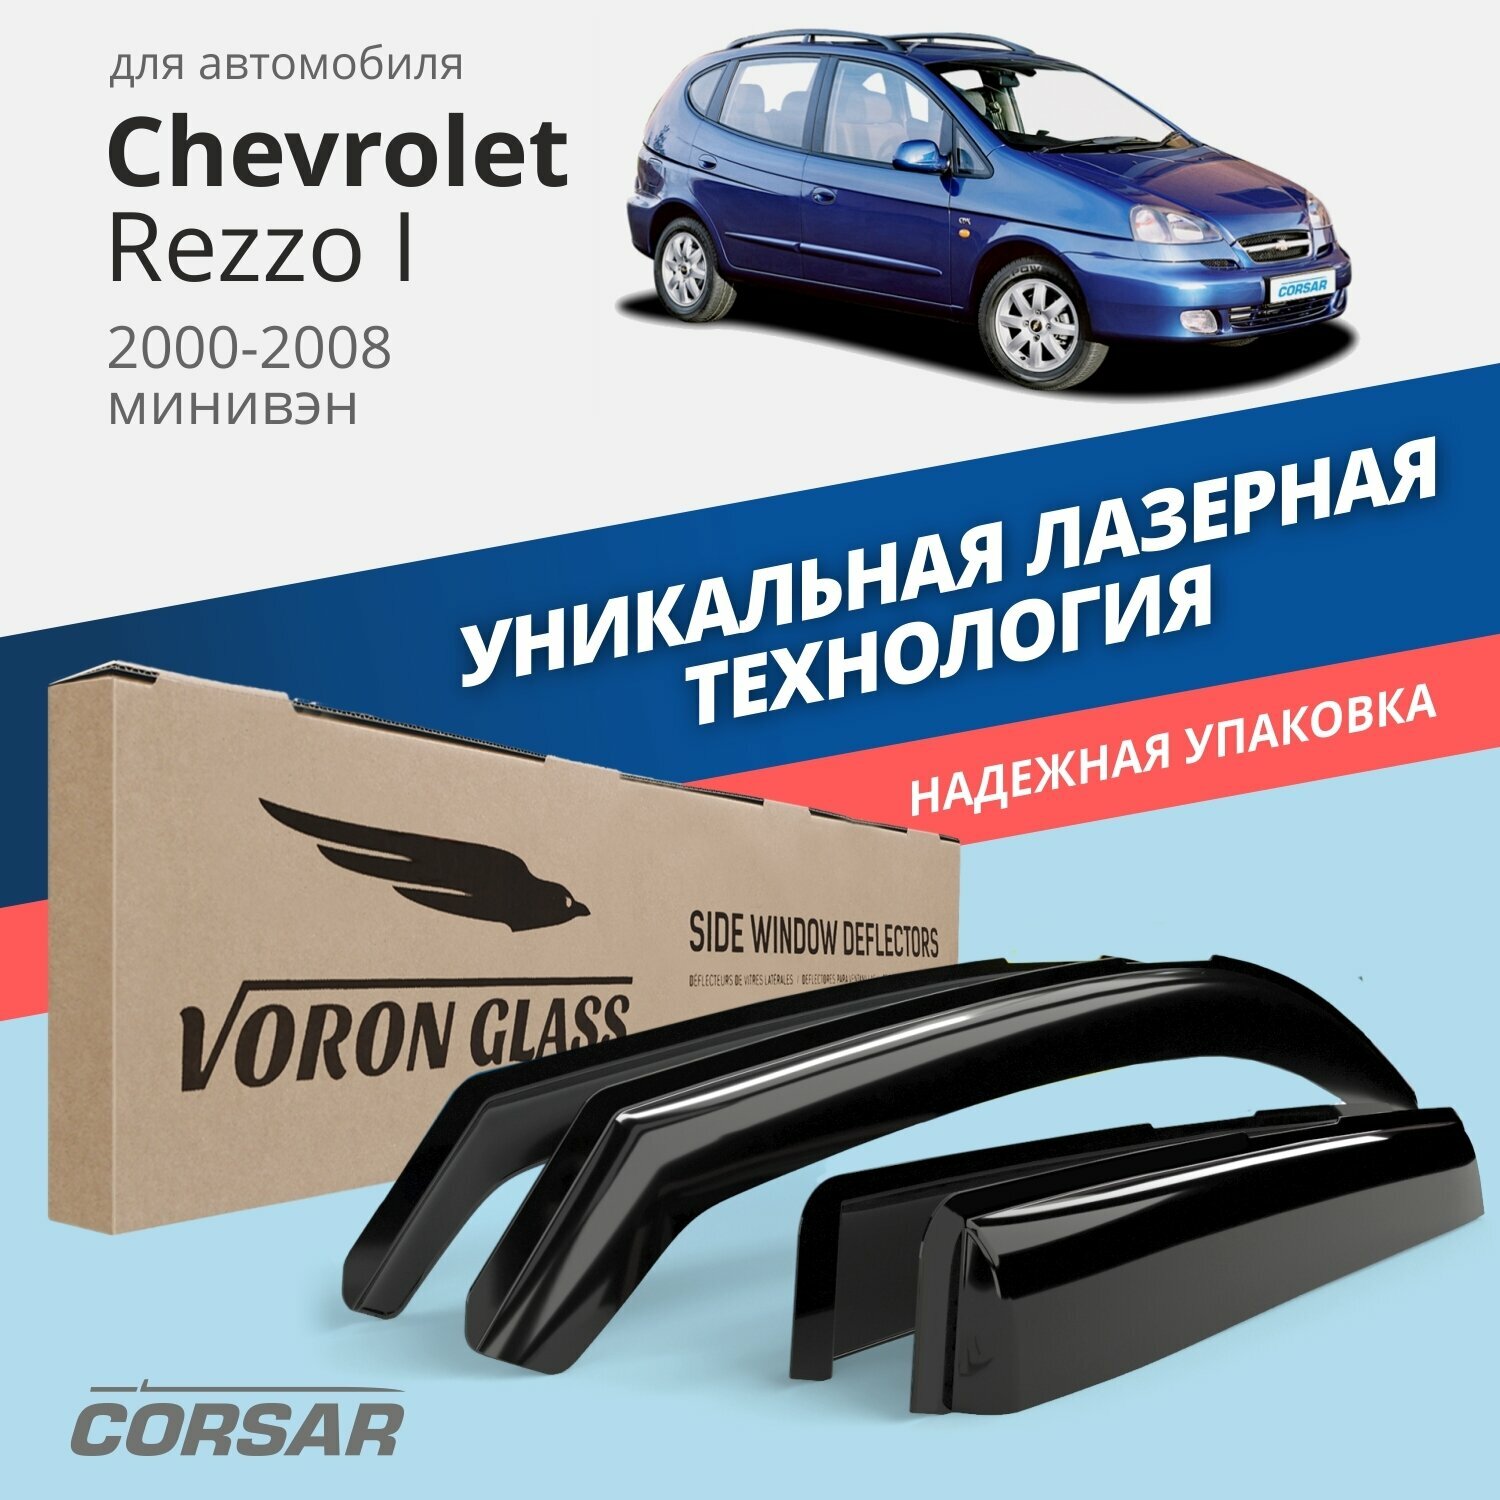 Дефлекторы окон Voron Glass серия Corsar для Chevrolet Rezzo I 2000-2008 накладные 4 